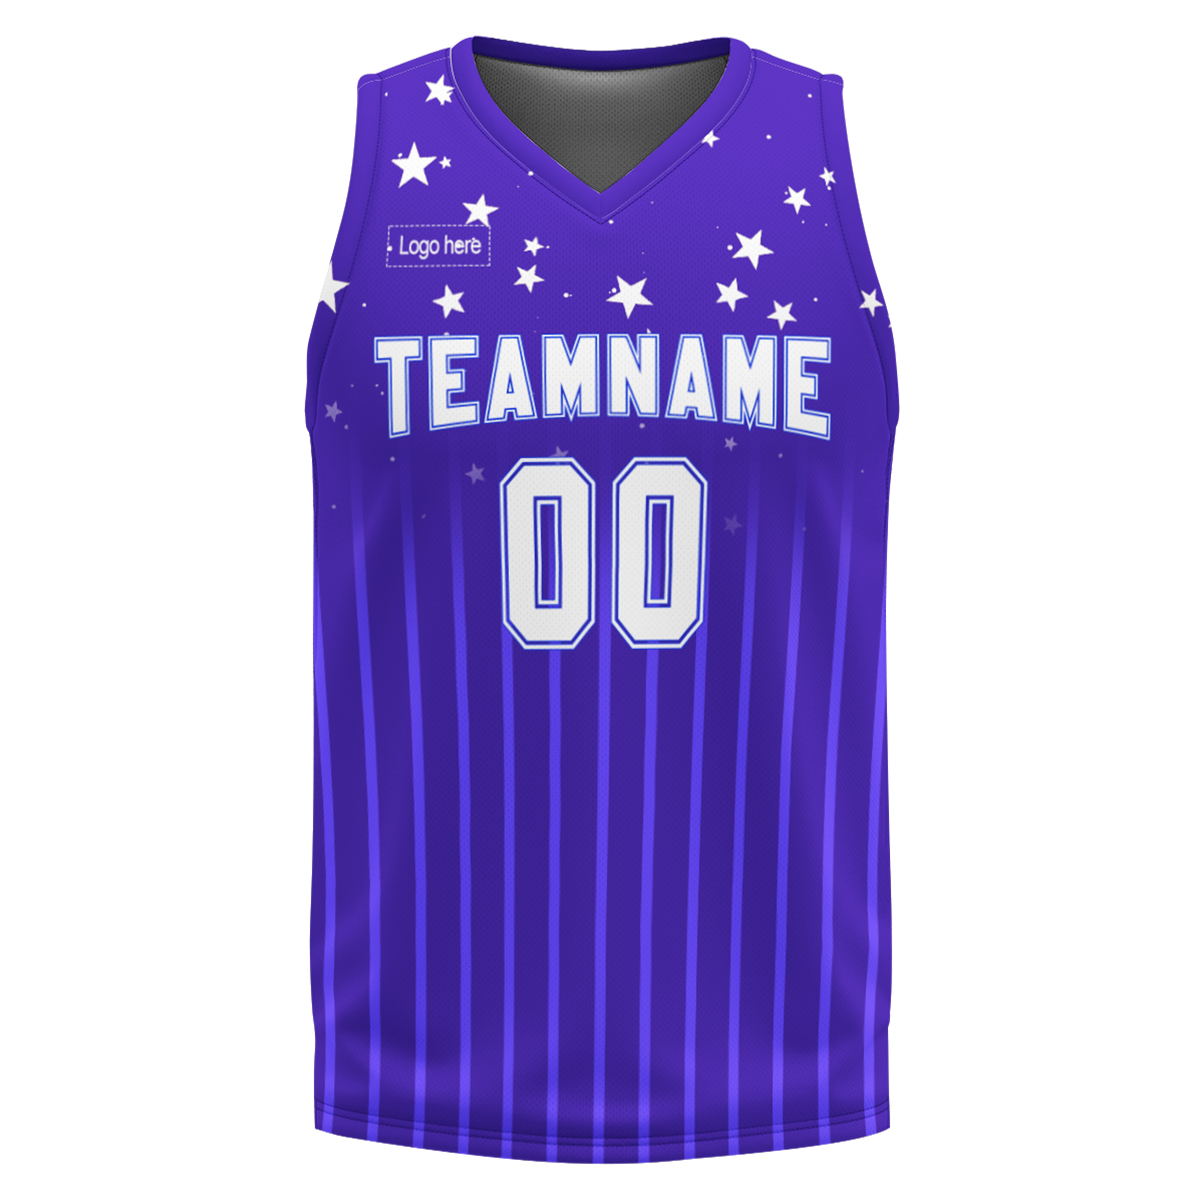 oem-printing-men-basketball-uniforms-custom-adult-mesh-durable-basketball-jerseys-at-cj-pod-4